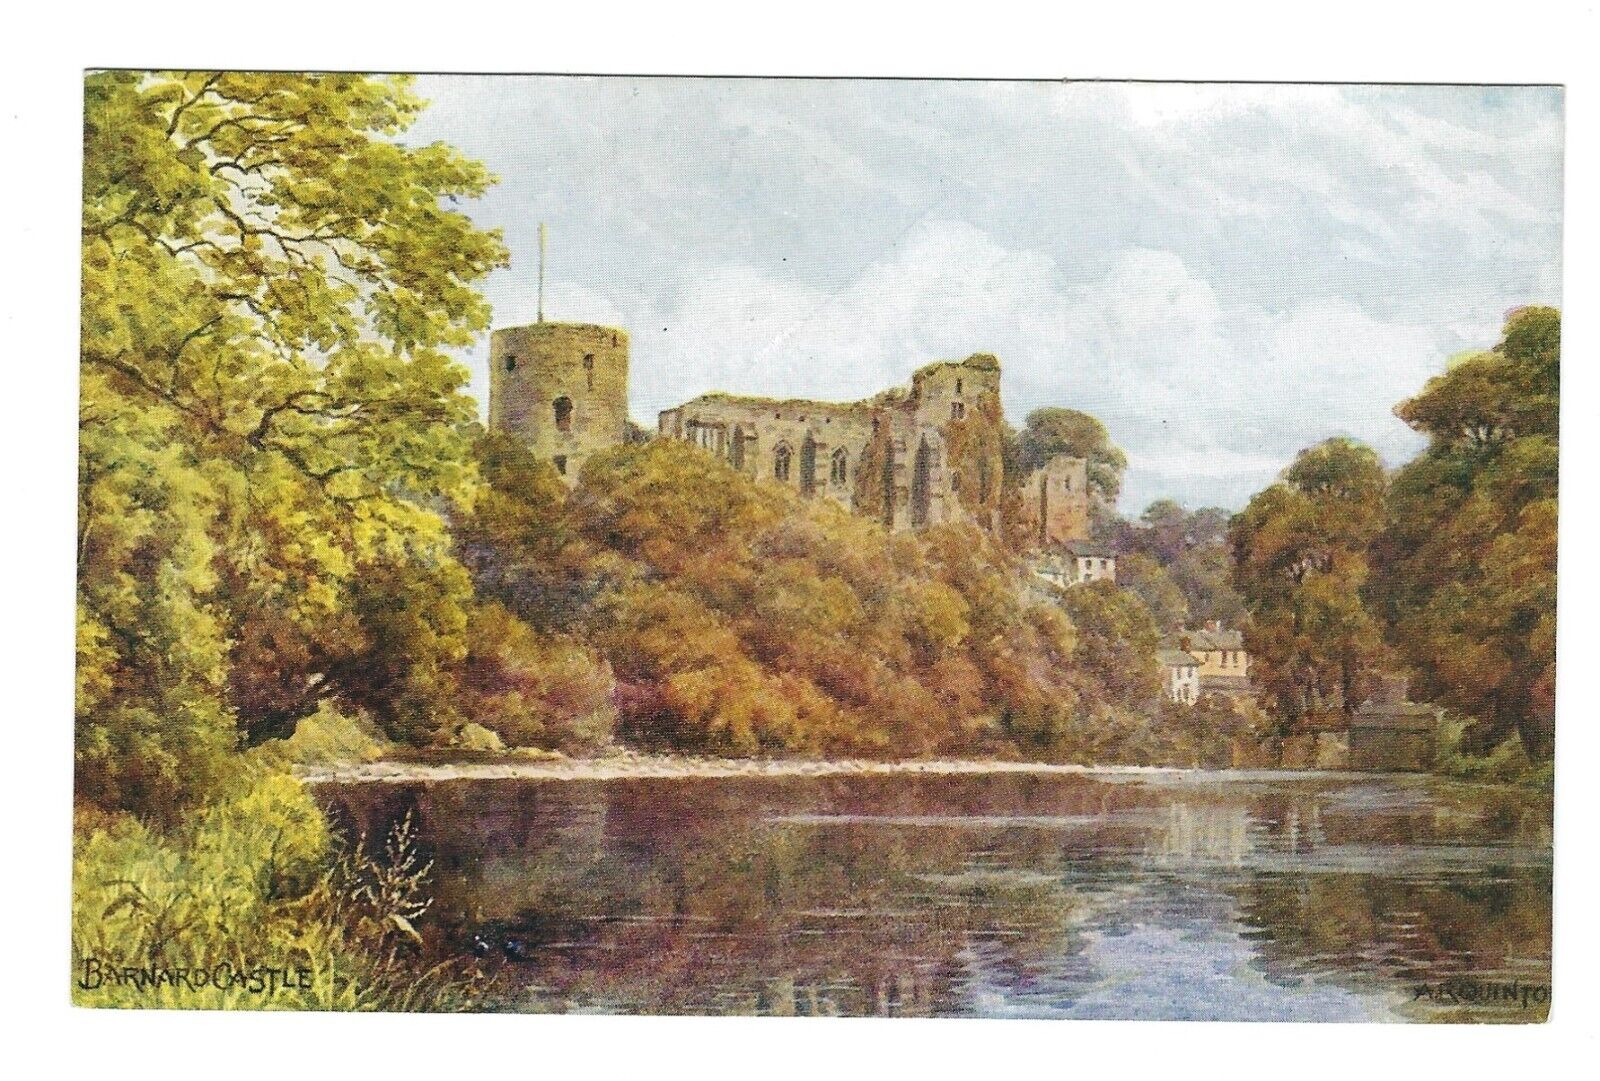 House Clearance - A R Quinton Co, Durham card. Salmon 1425. Barnard Castle, pristine